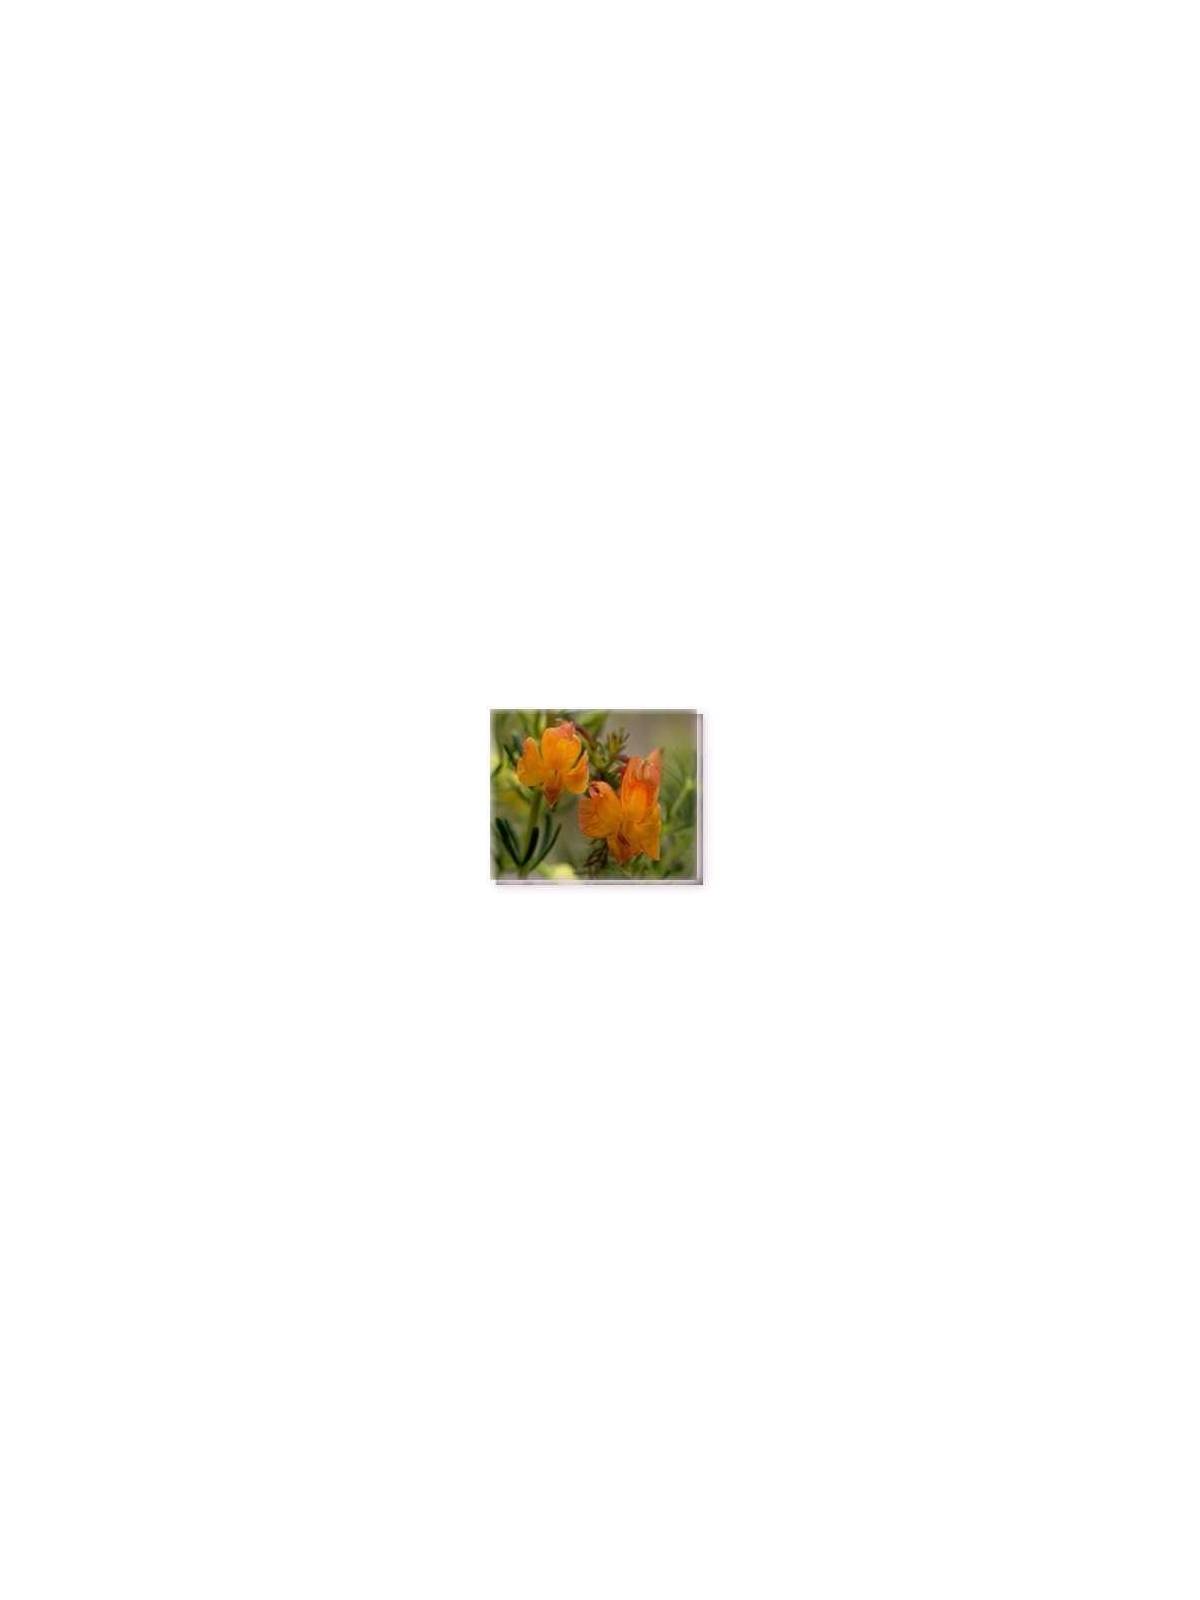 Fiore Orange Leschenaultia Living Essences